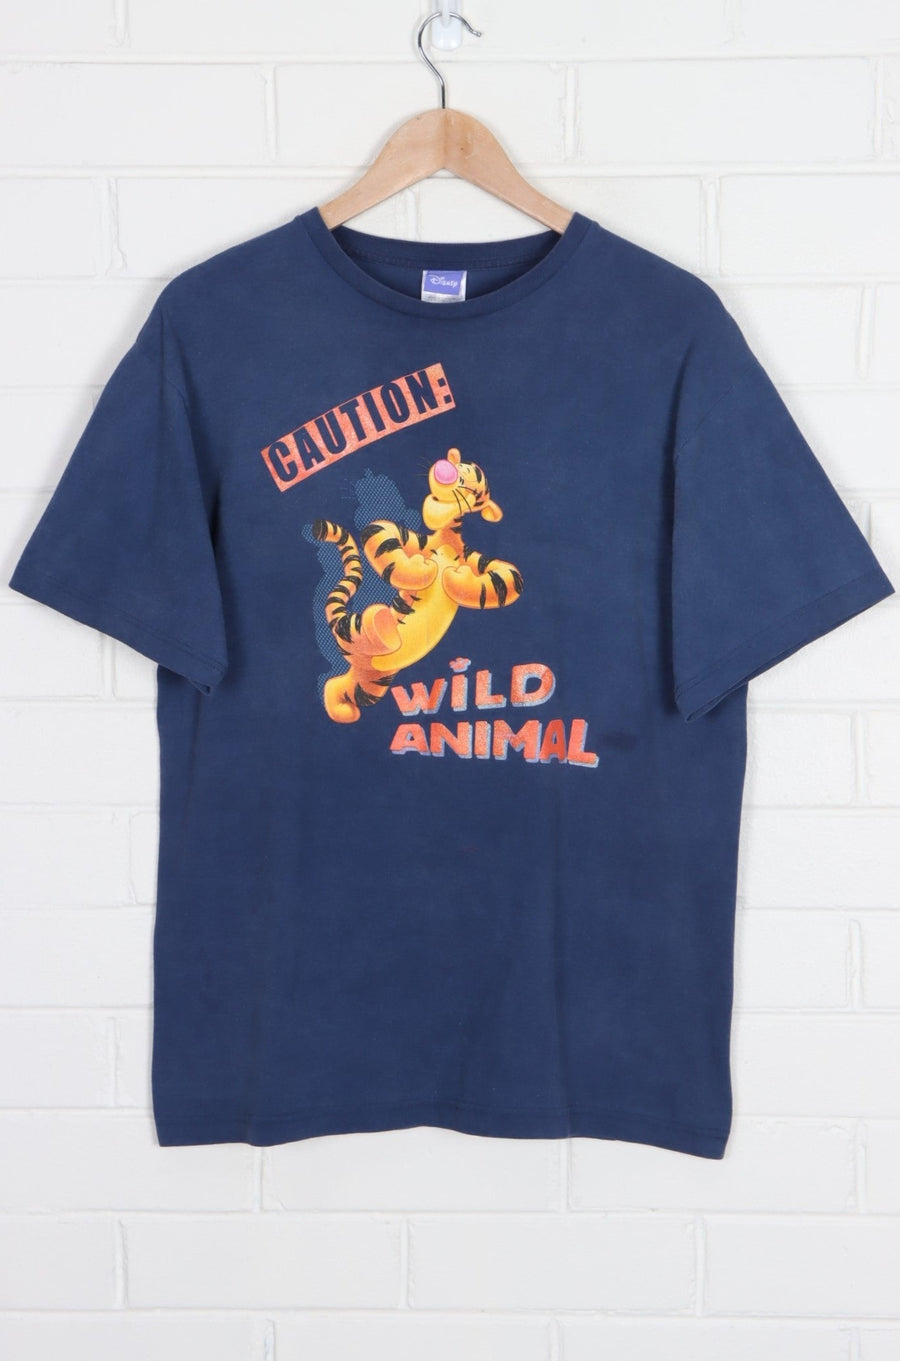 DISNEY Tigger "Caution Wild Animal" T-Shirt (M-L)